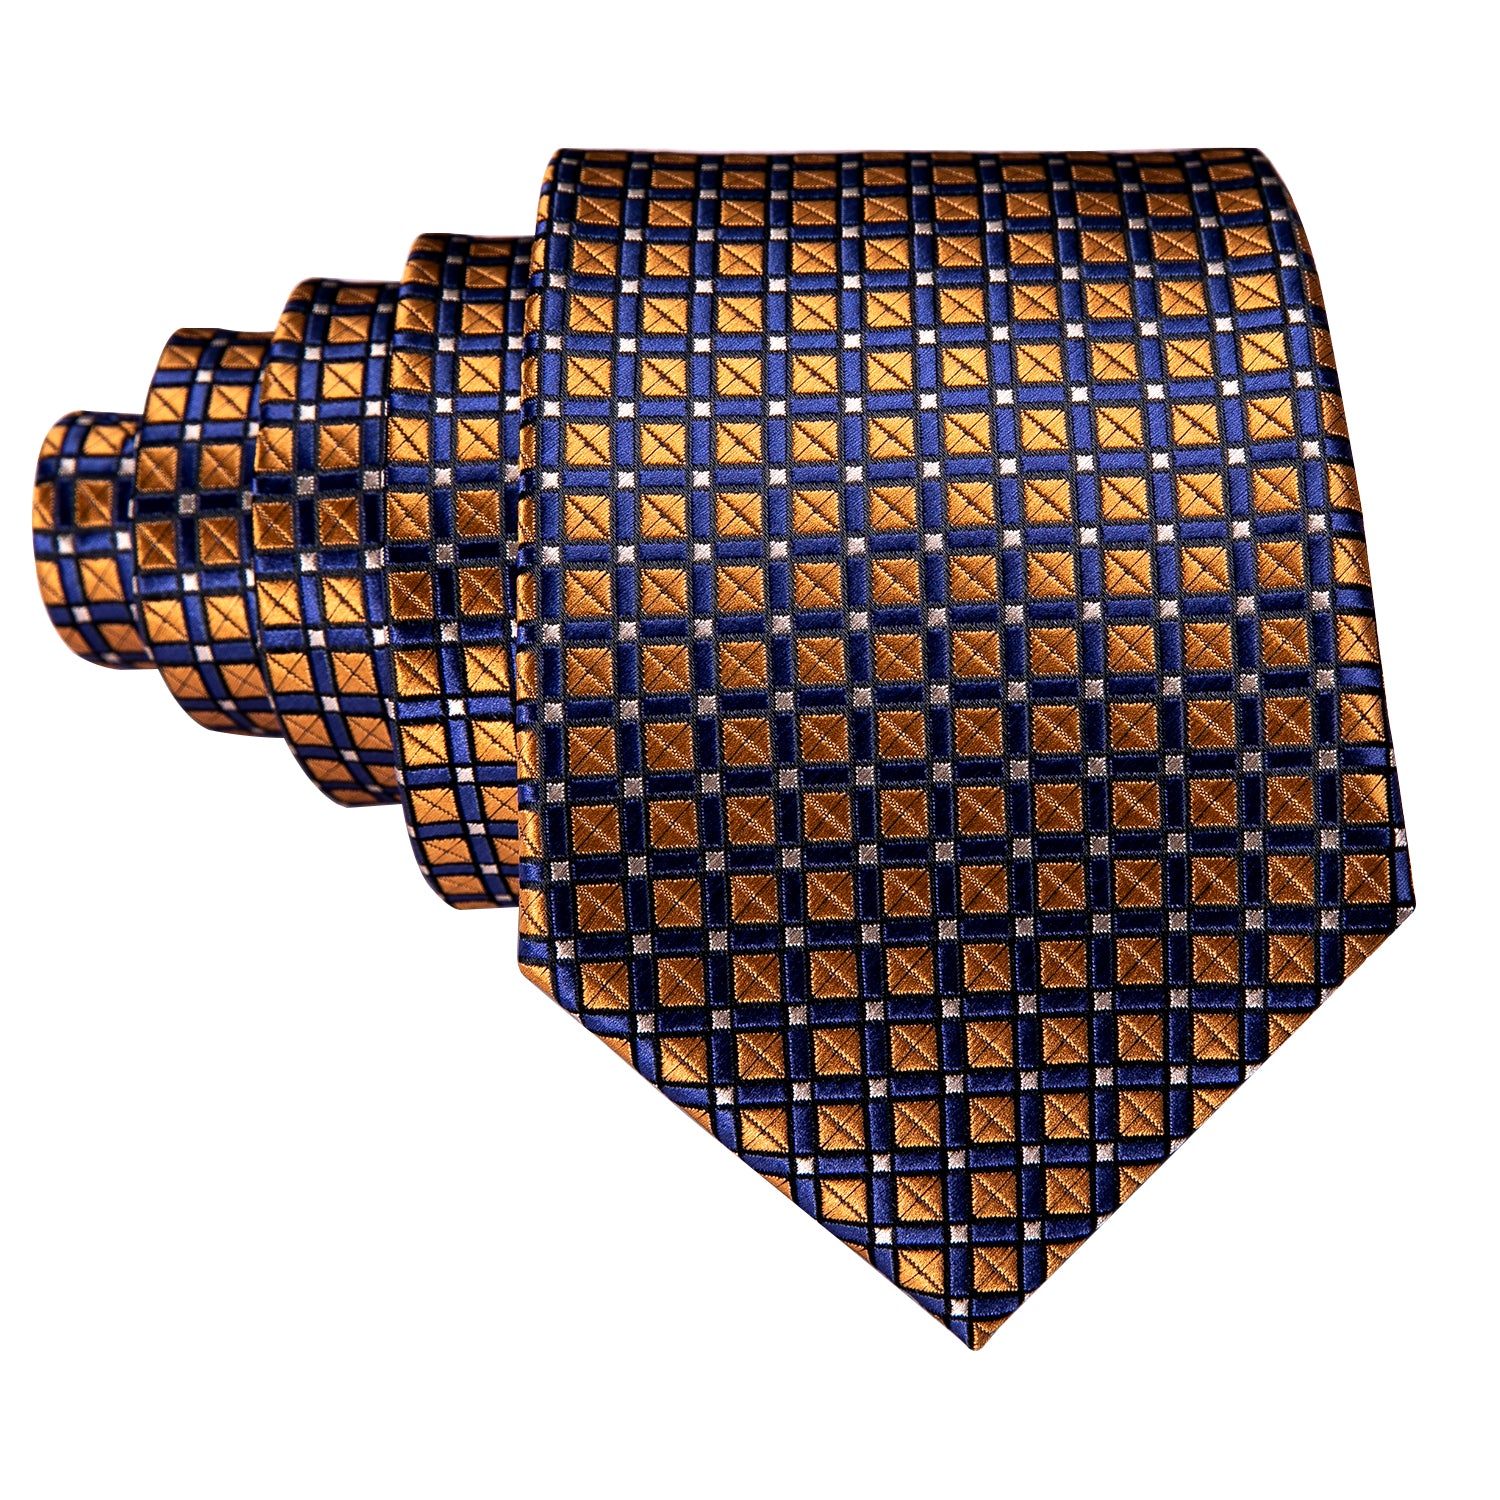 New Brown Polka Dot Silk Solid Tie Hanky Cufflinks Set